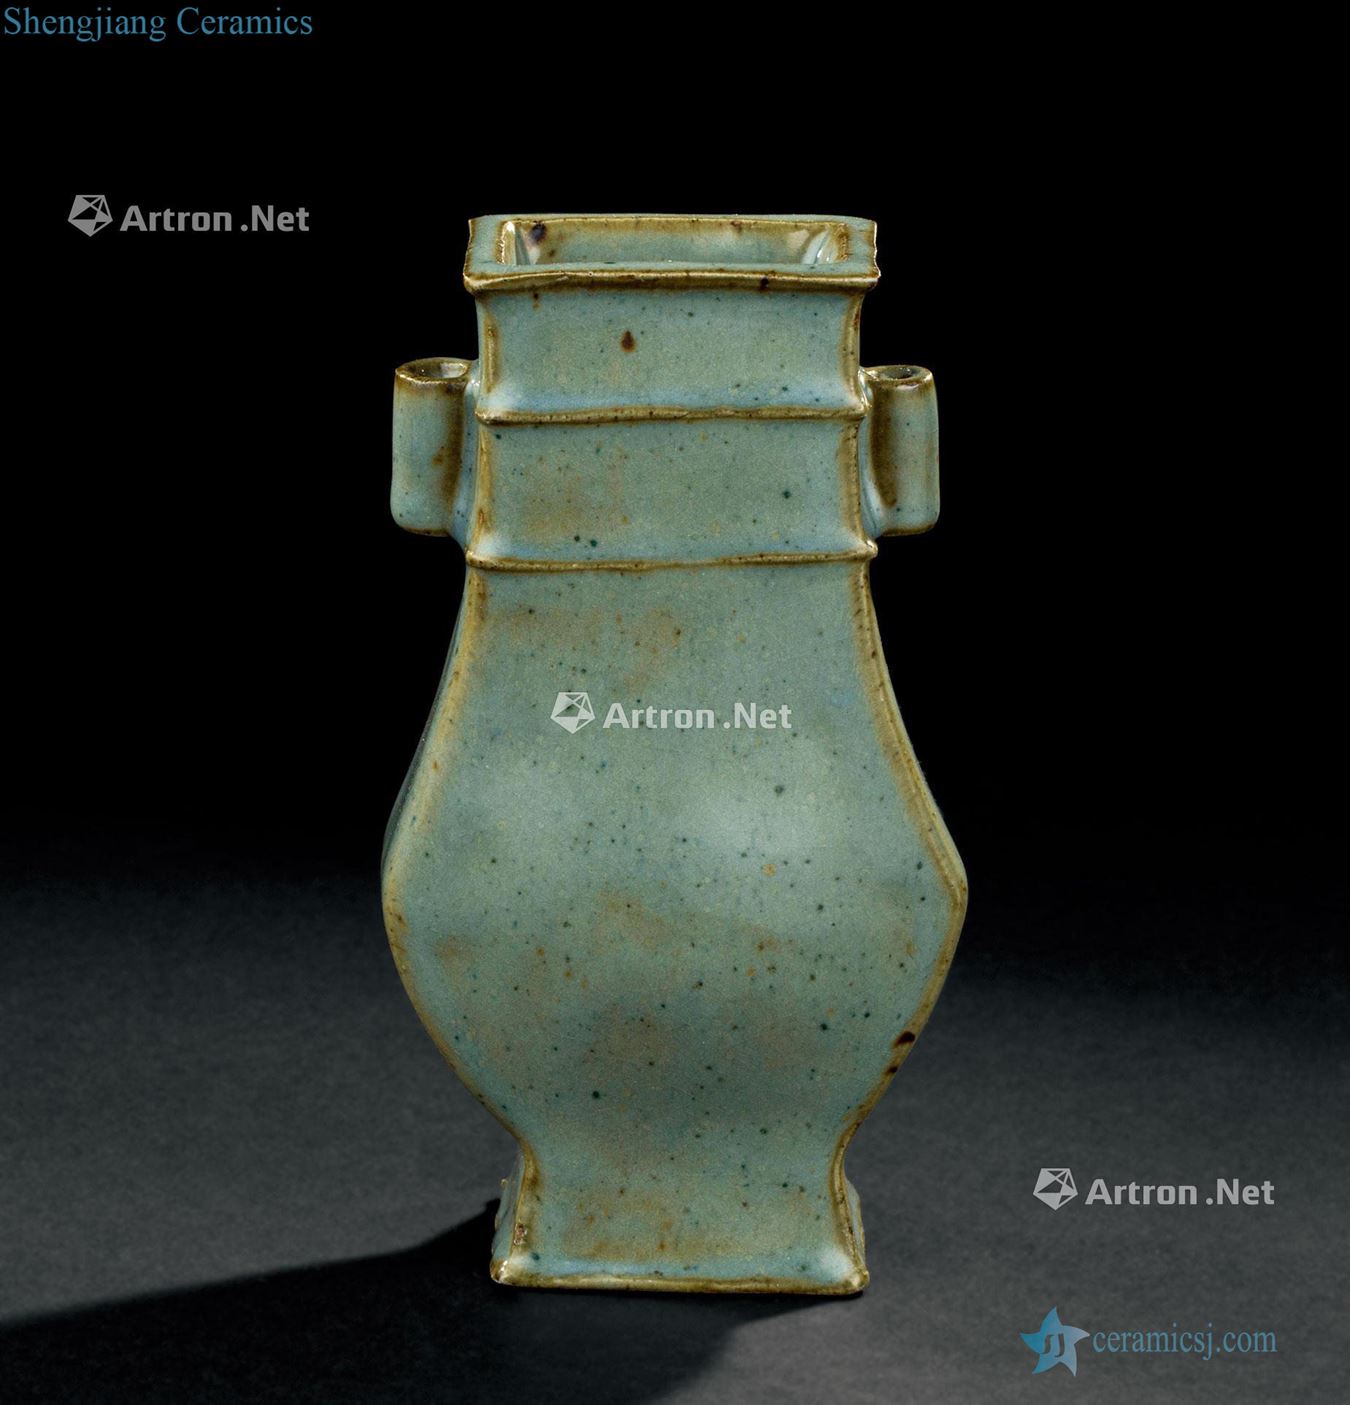 Ming dynasty (1368-1644), copy your kiln penetration ears